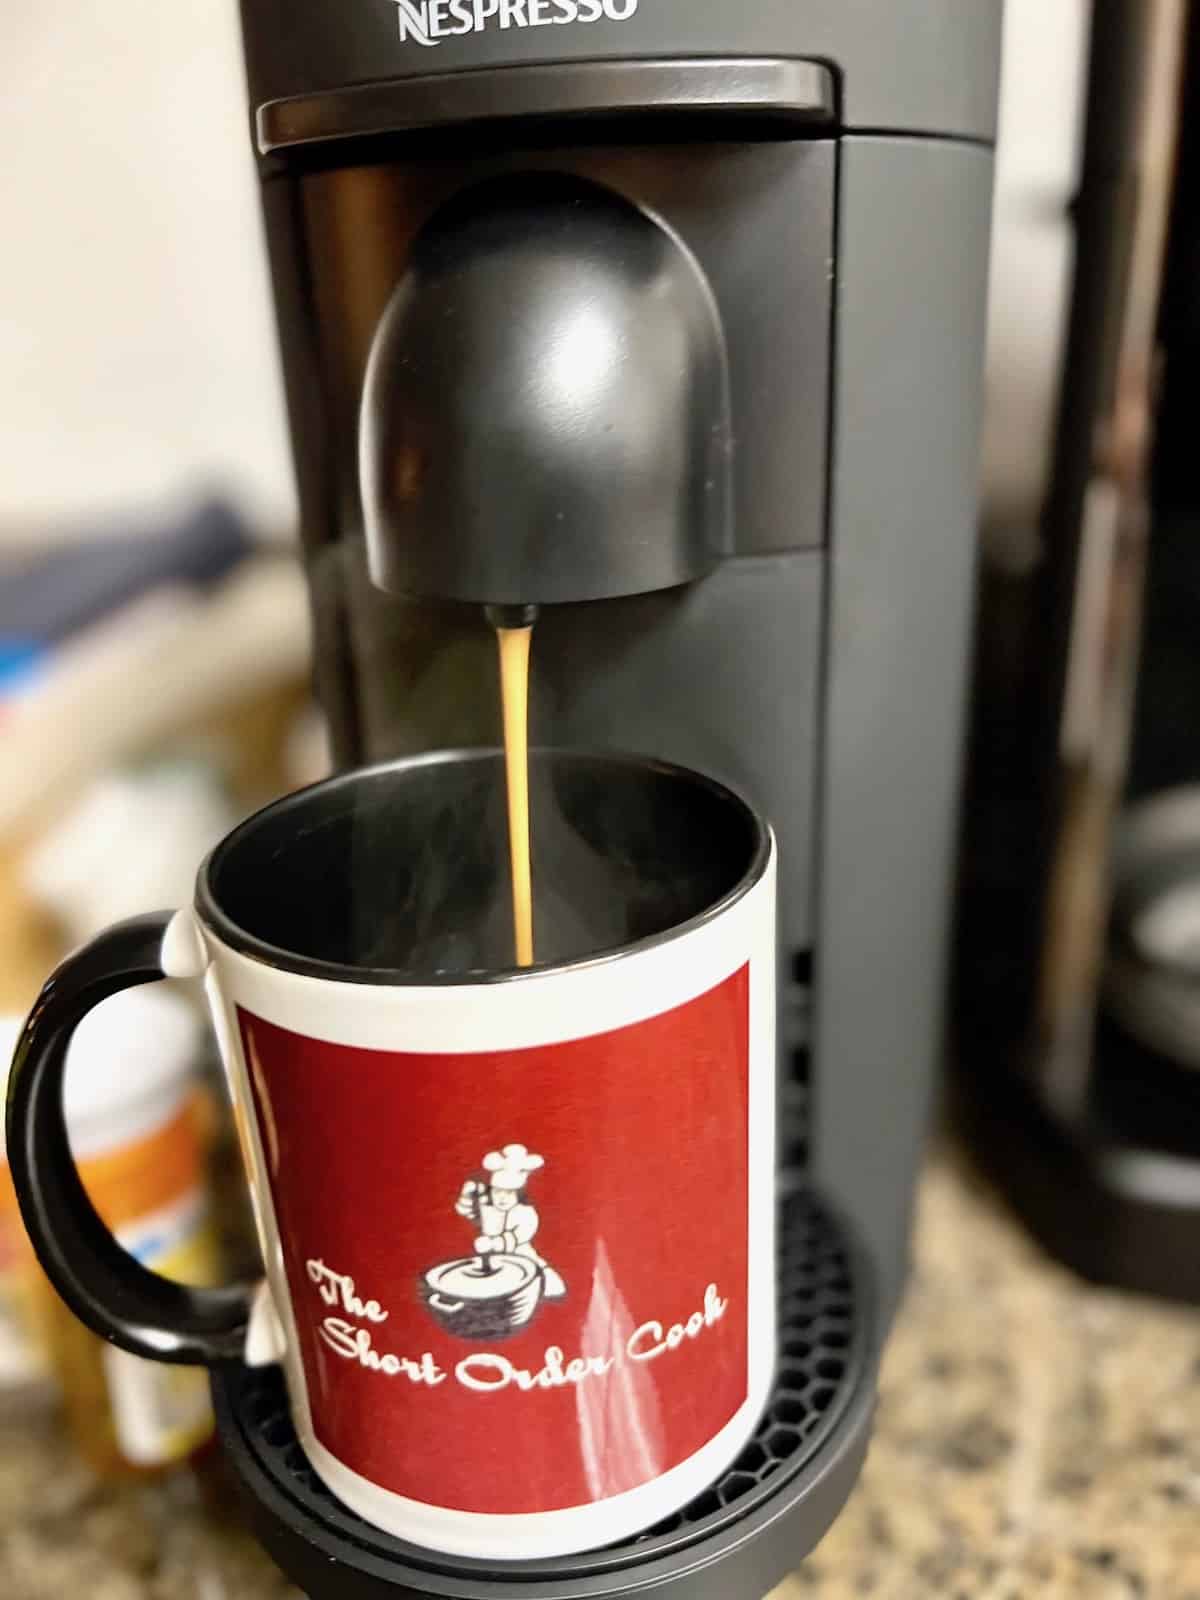  making coffee in the Nespresso machine.